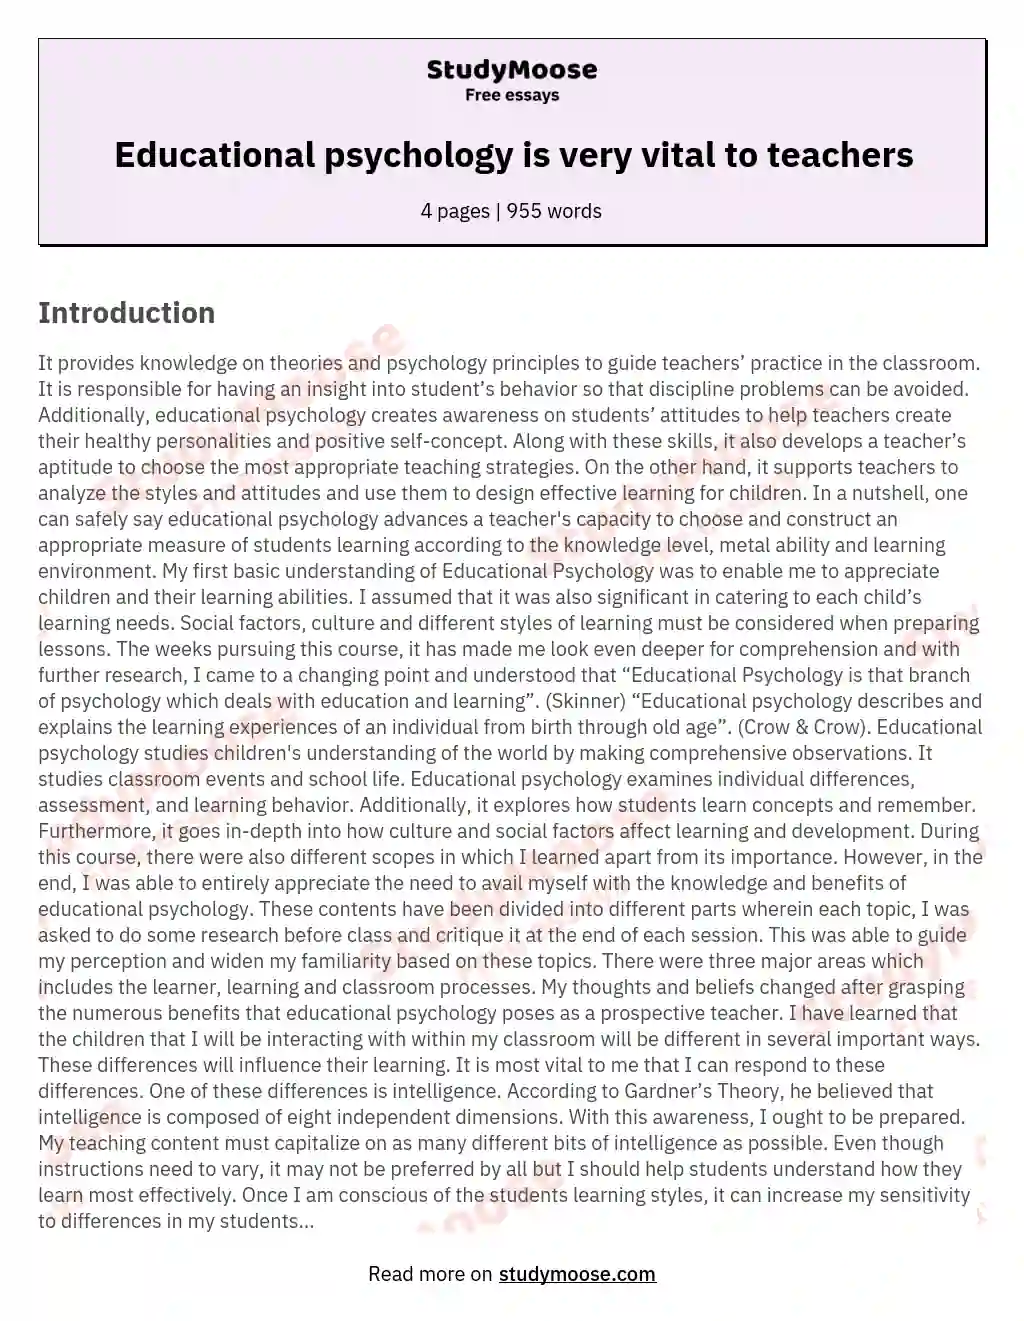 Educational psychology is very vital to teachers essay